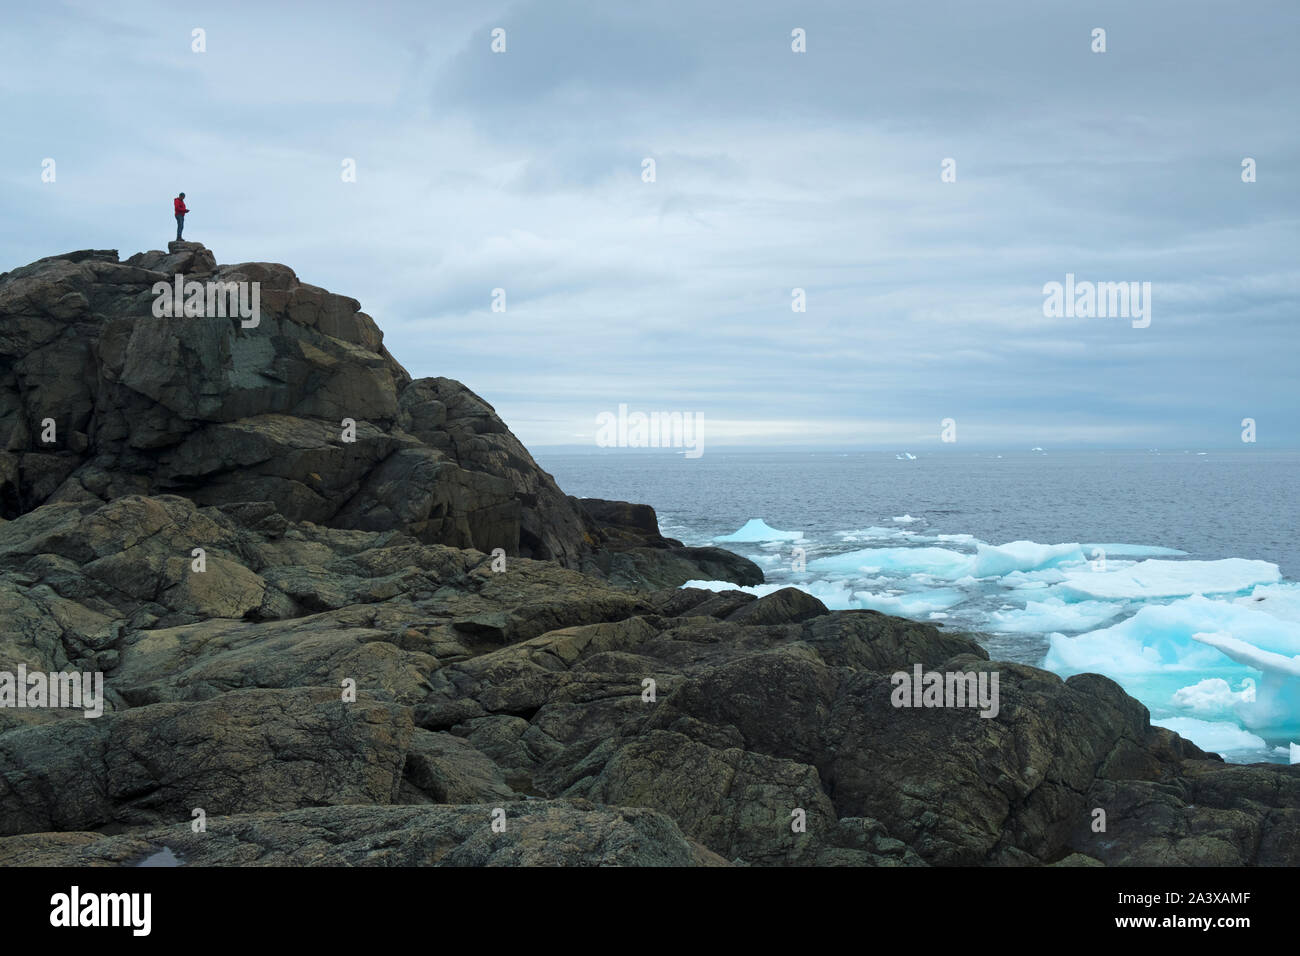 Pack ice floats near the rocky coast at St. Anthony, Newfoundland Stock Photo